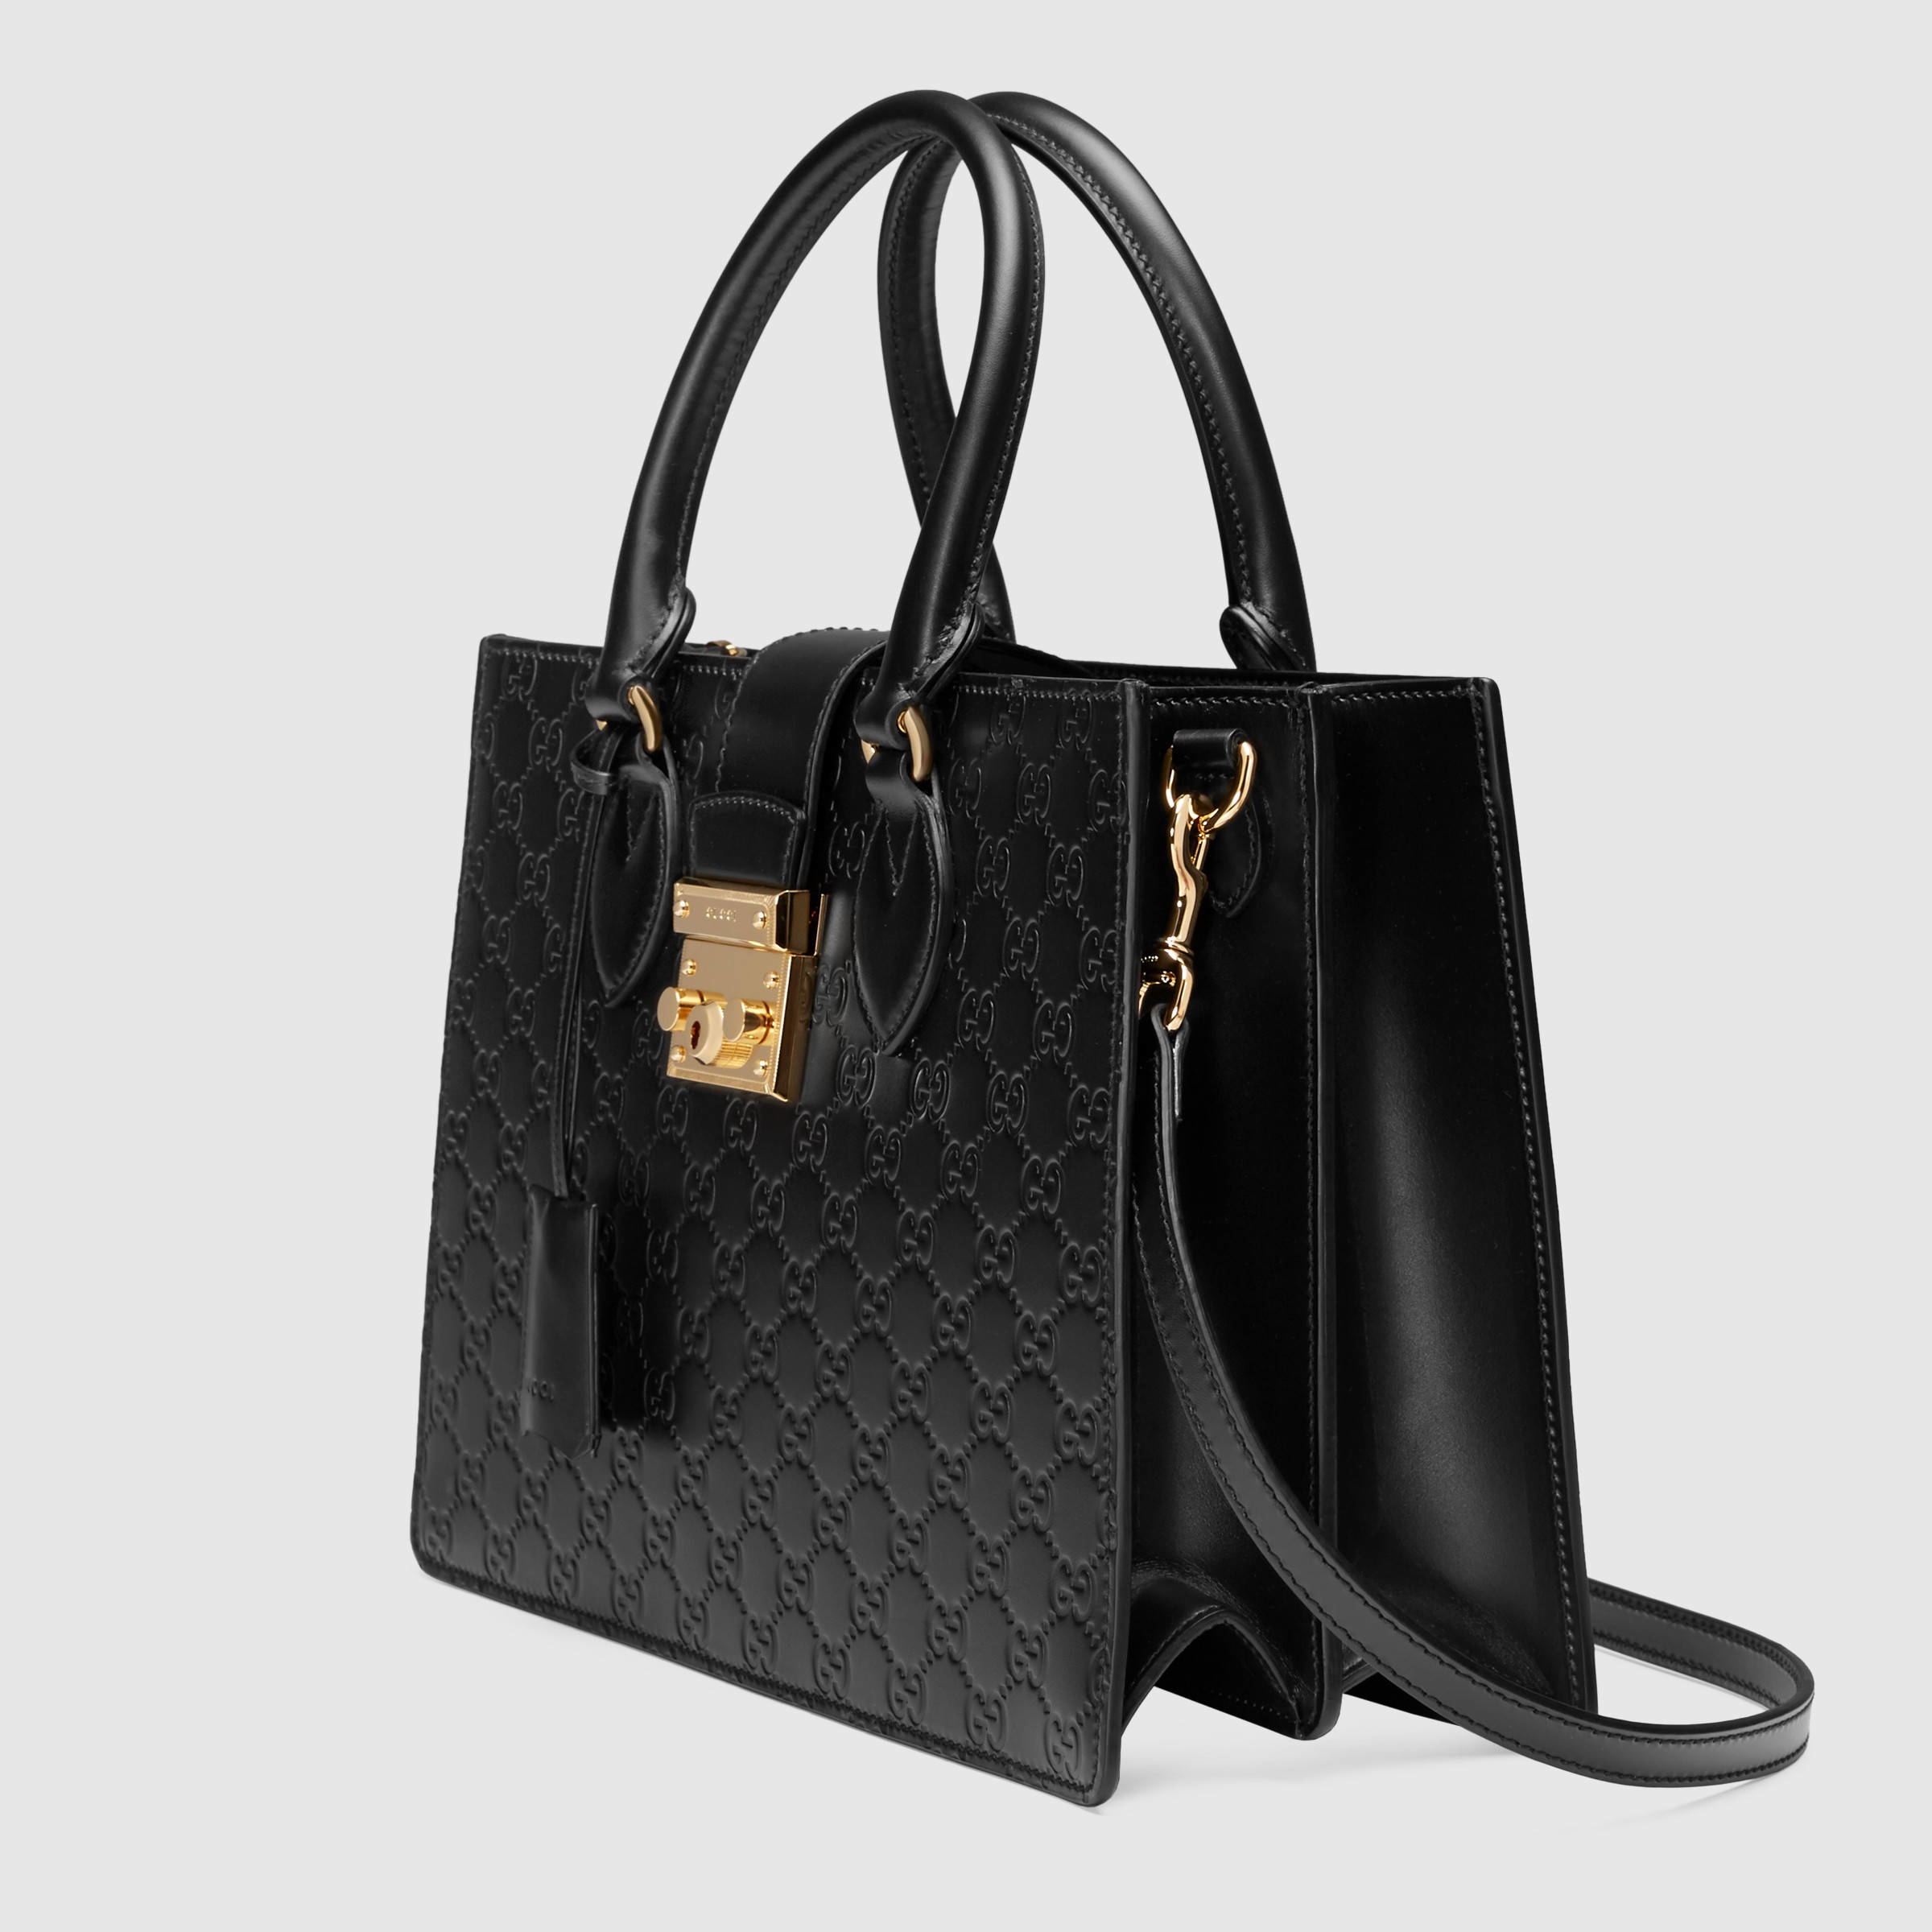 Lyst - Gucci Padlock Signature Leather Bag in Black